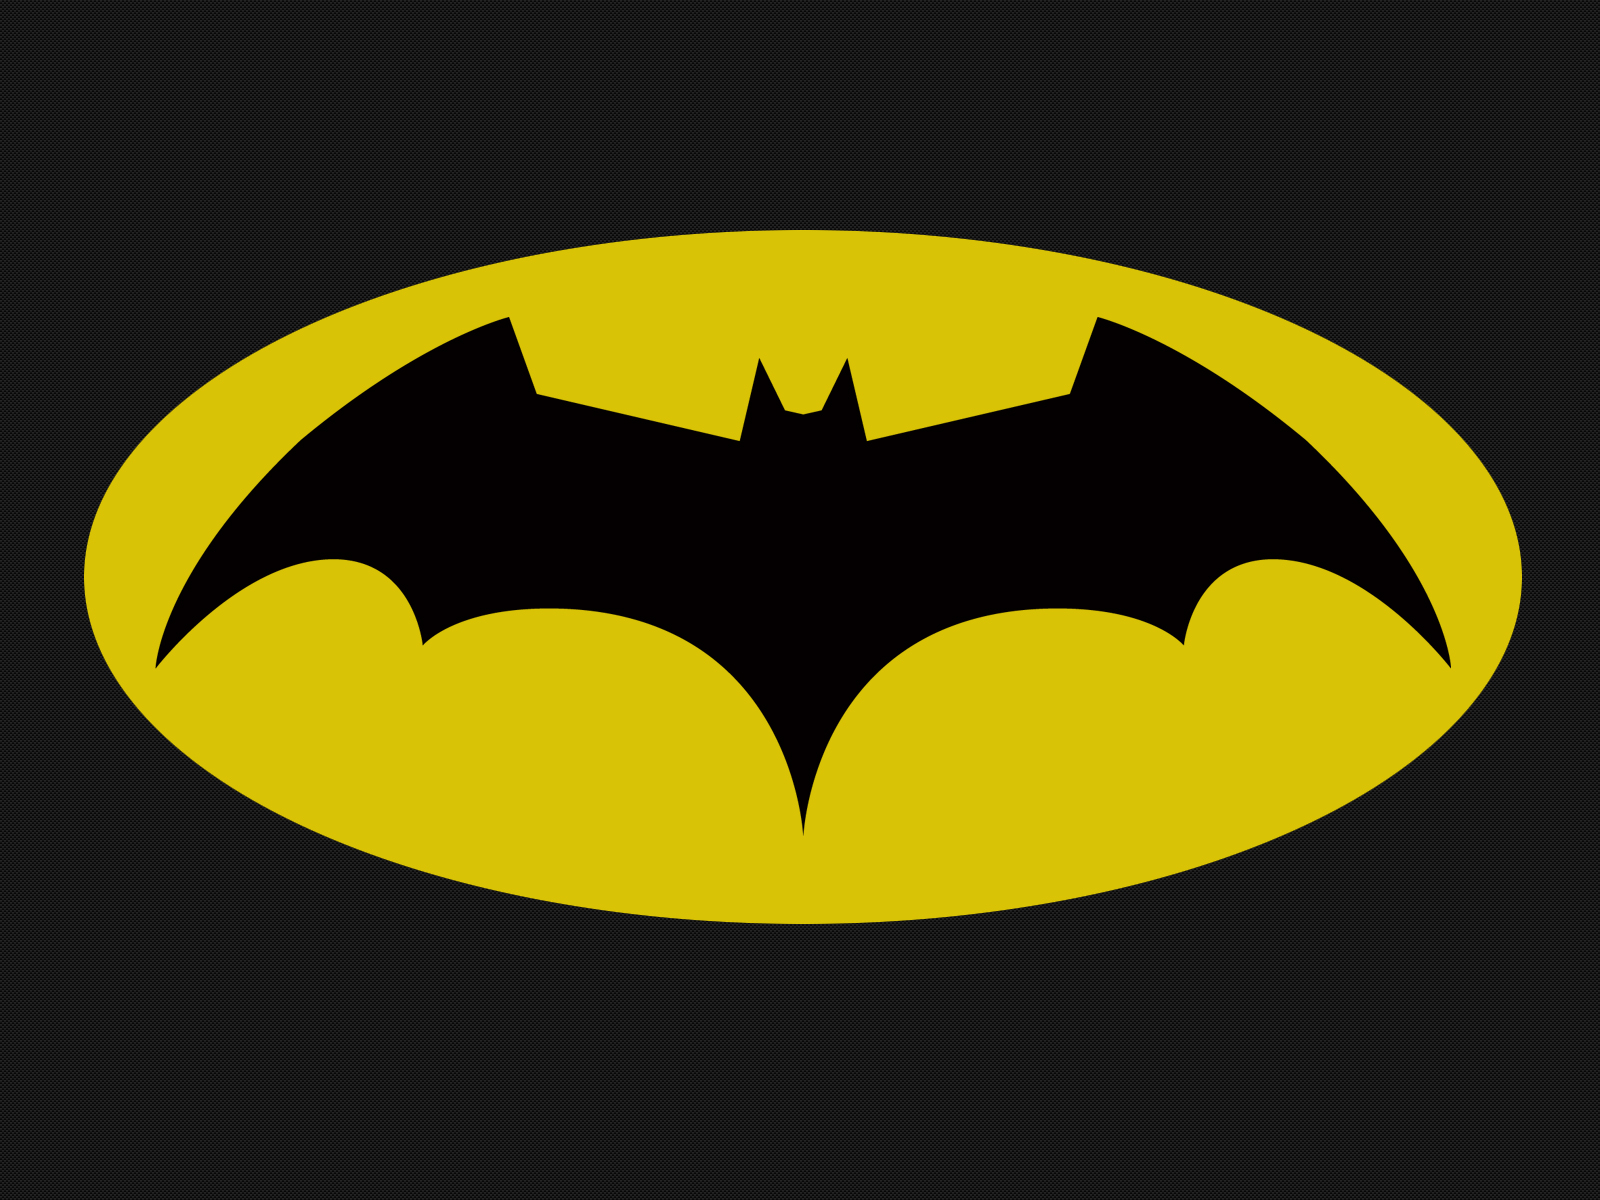 Batman Symbol Phone Wallpaper Images & Pictures - Becuo